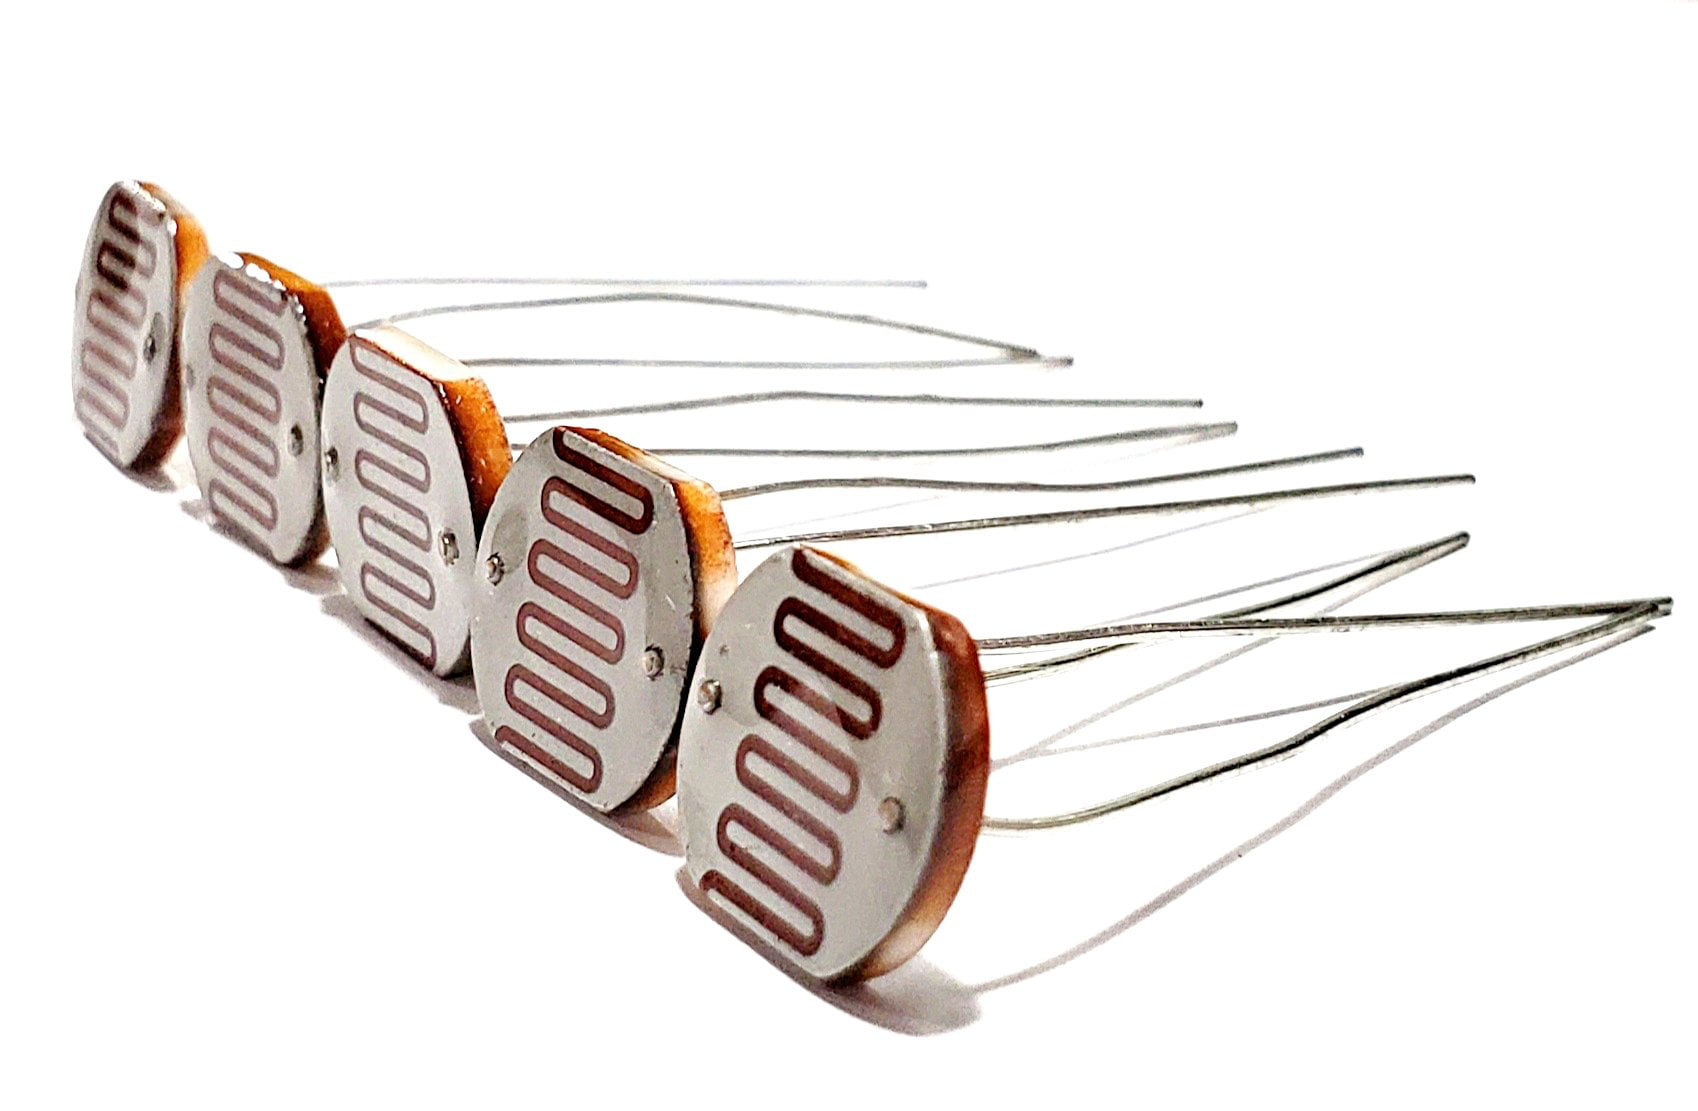 15pcs Photoresistor Photoconductive Cell Light Dependent Resistor 5-10K LDR 20mm Ceramic Pacakge 